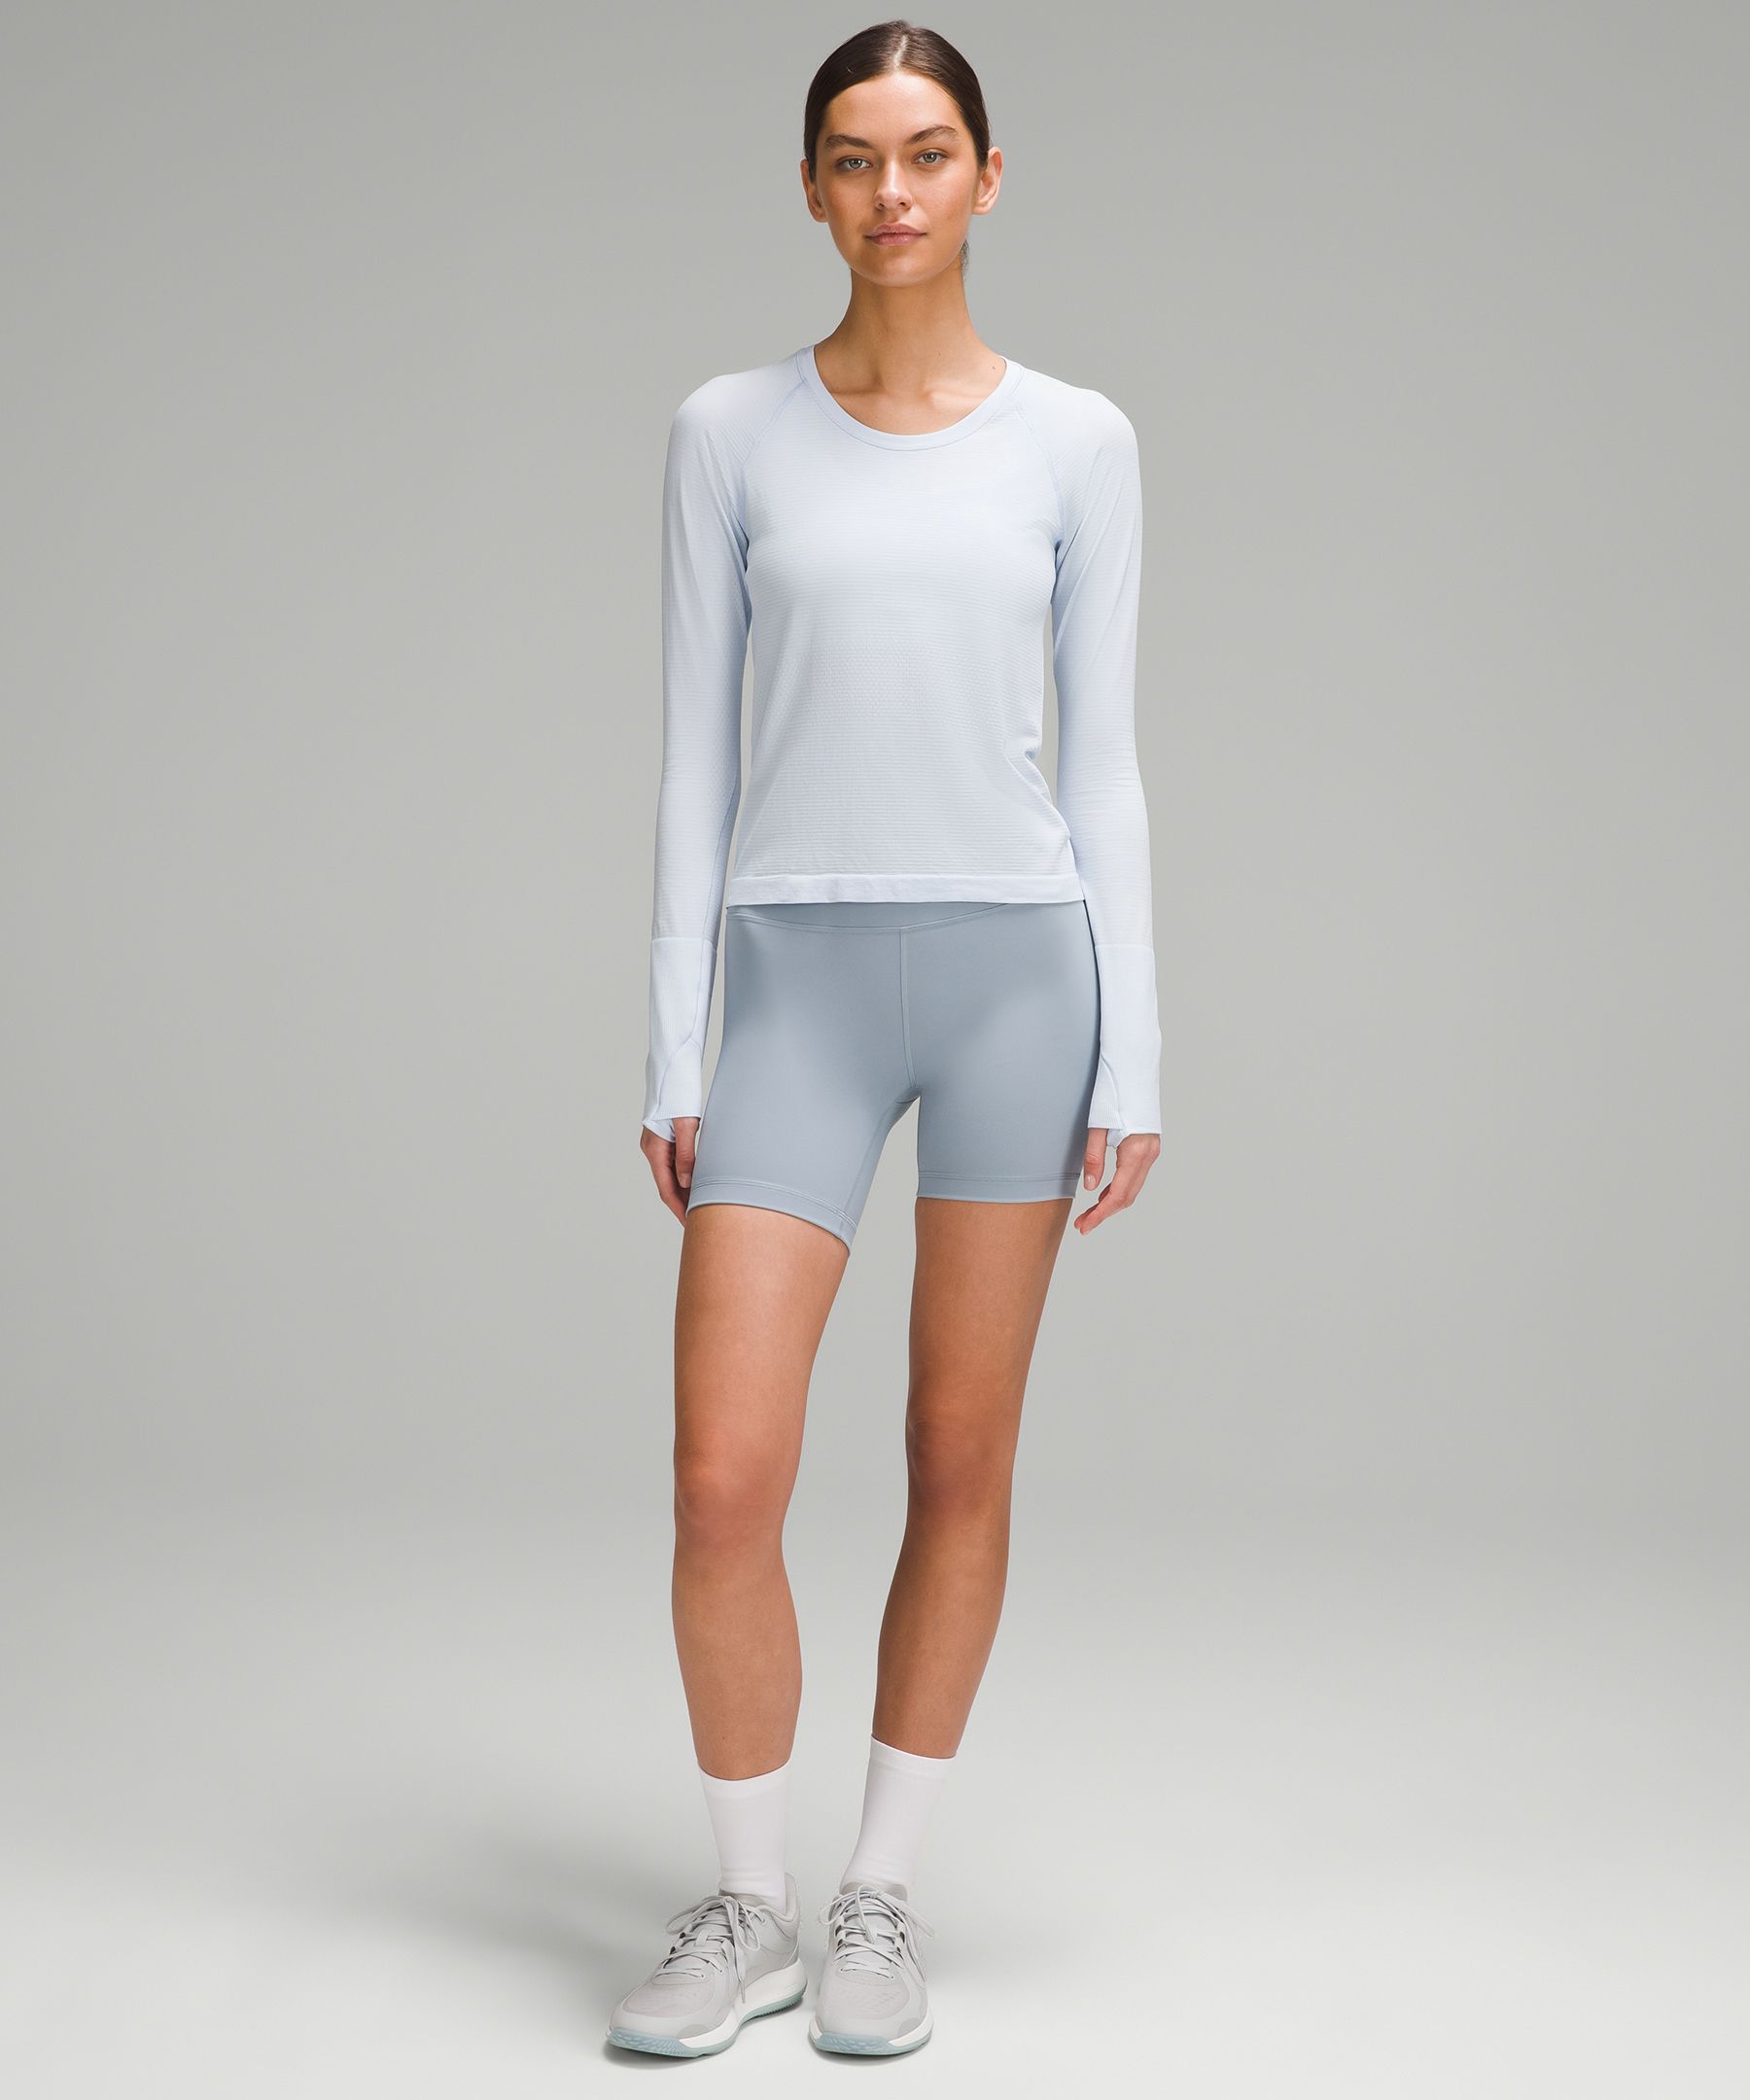 lululemon – Women's Swiftly Tech Long-Sleeve Shirt 2.0 Race Length – Color  Pink – Size 12, £68.00